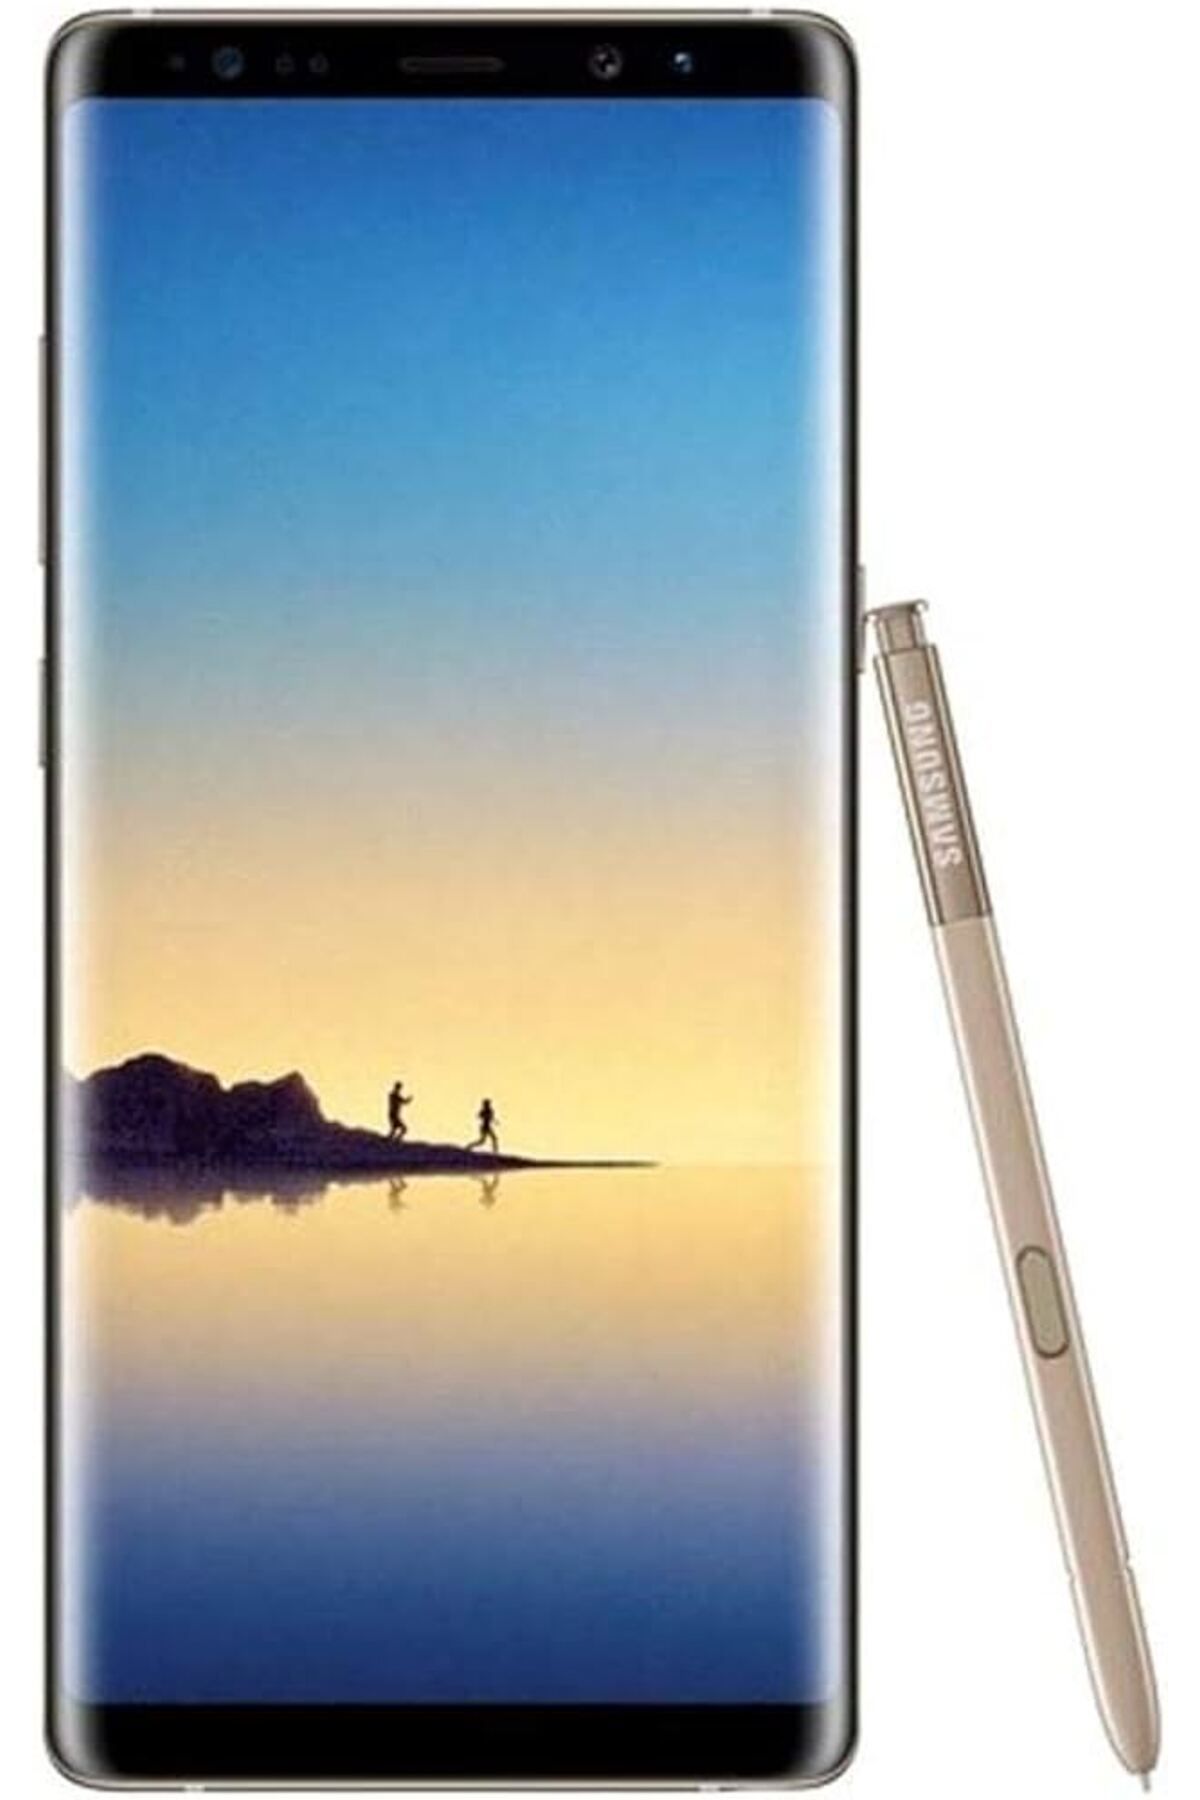 Samsung Yenilenmiş Samsung Galaxy Note 8 64GB Gold B Kalite